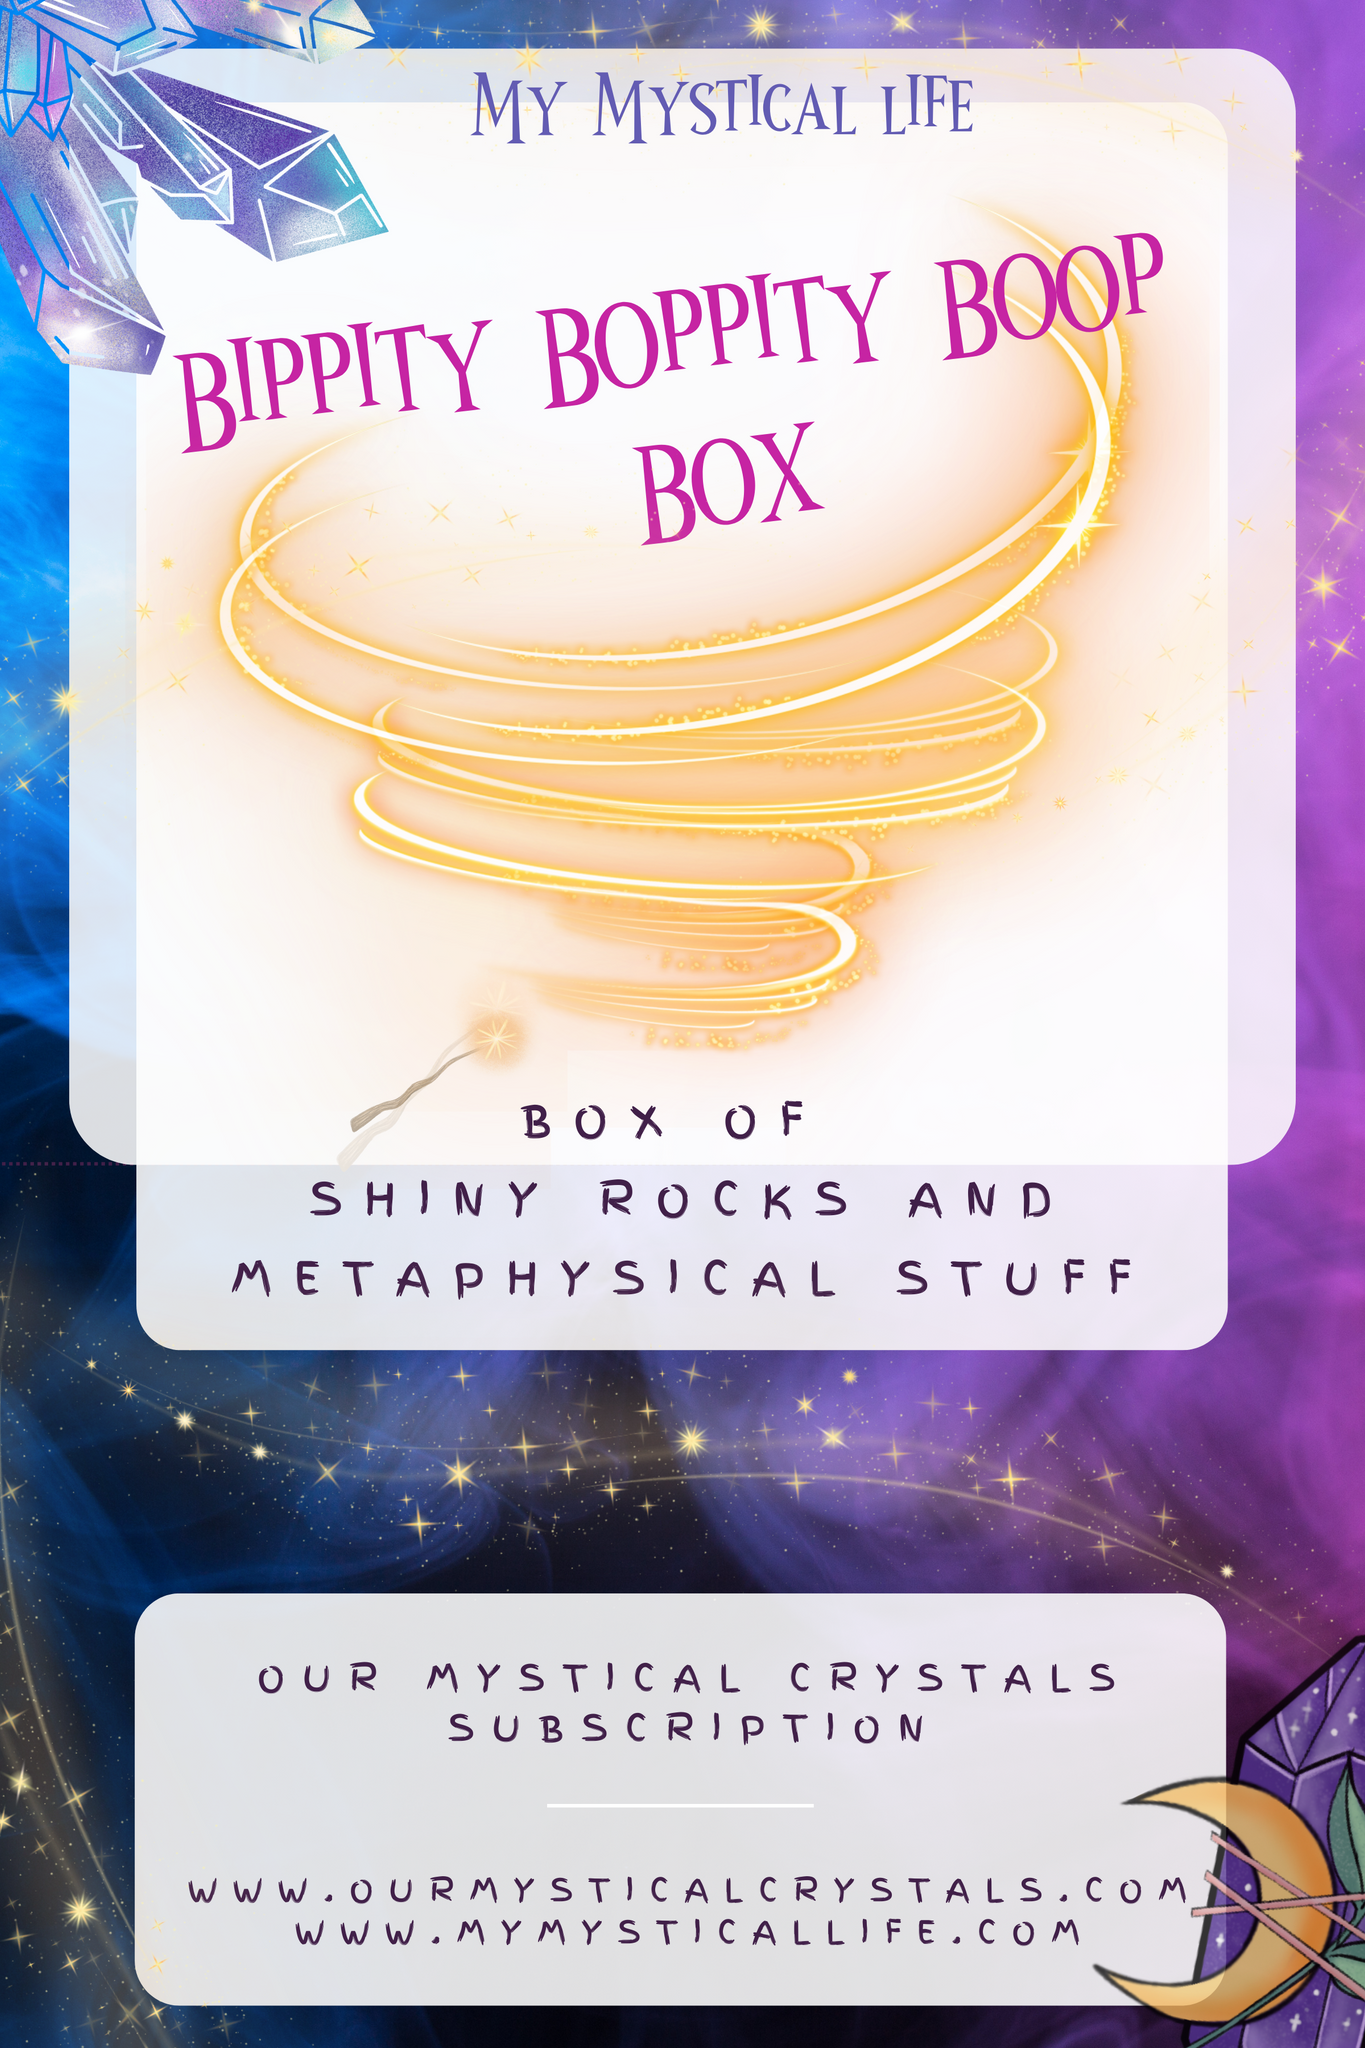 Bippity Boppity Boop Mystery Box Of Goodies